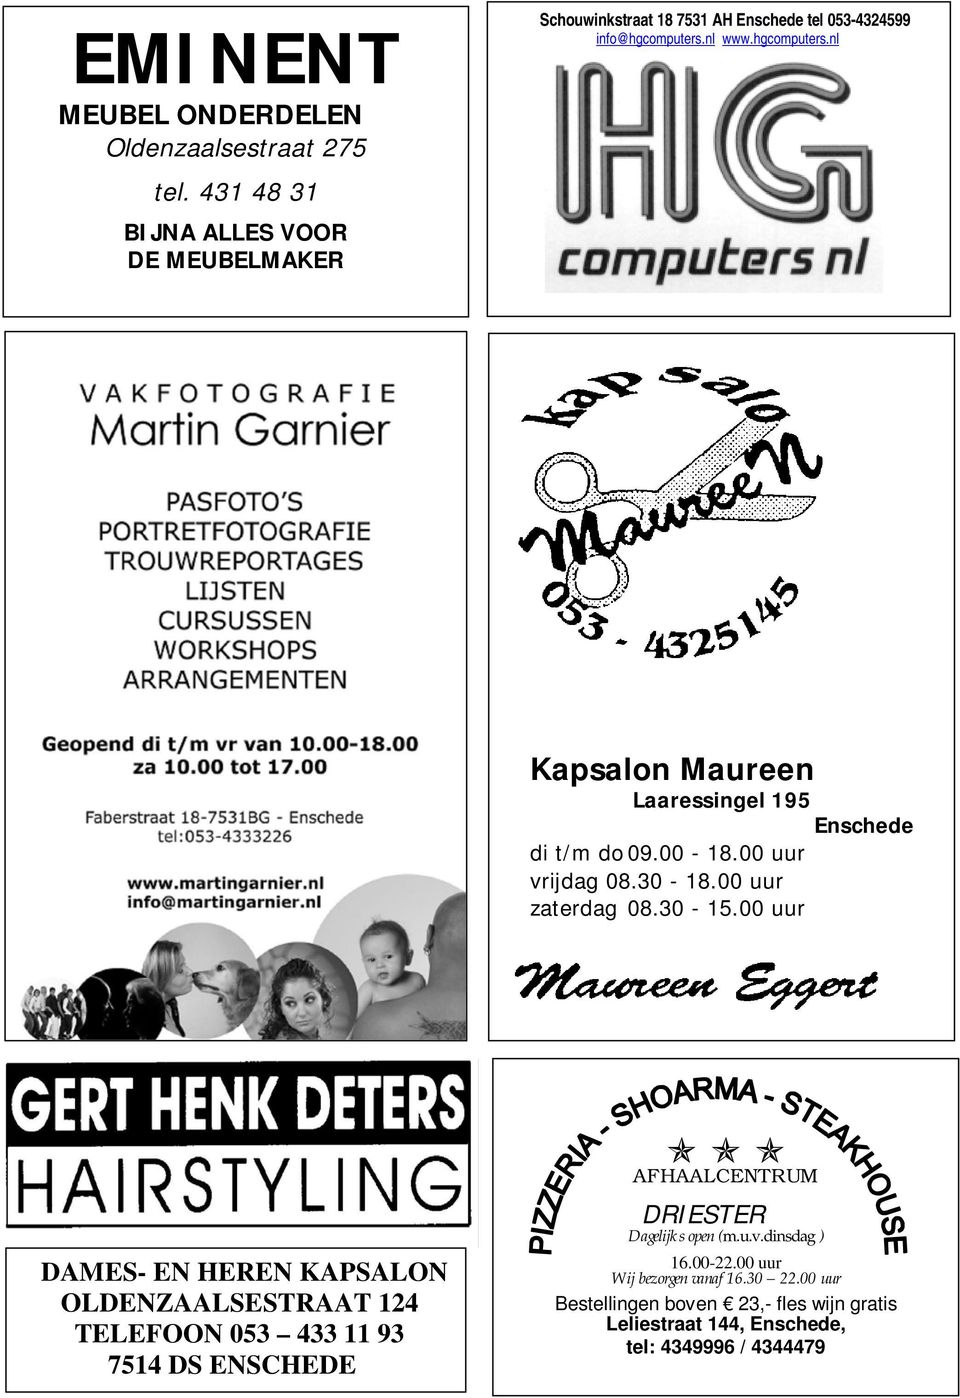 nl www.hgcomputers.nl Kapsalon Maureen Laaressingel 195 Enschede di t/m do 09.00-18.00 uur vrijdag 08.30-18.00 uur zaterdag 08.30-15.